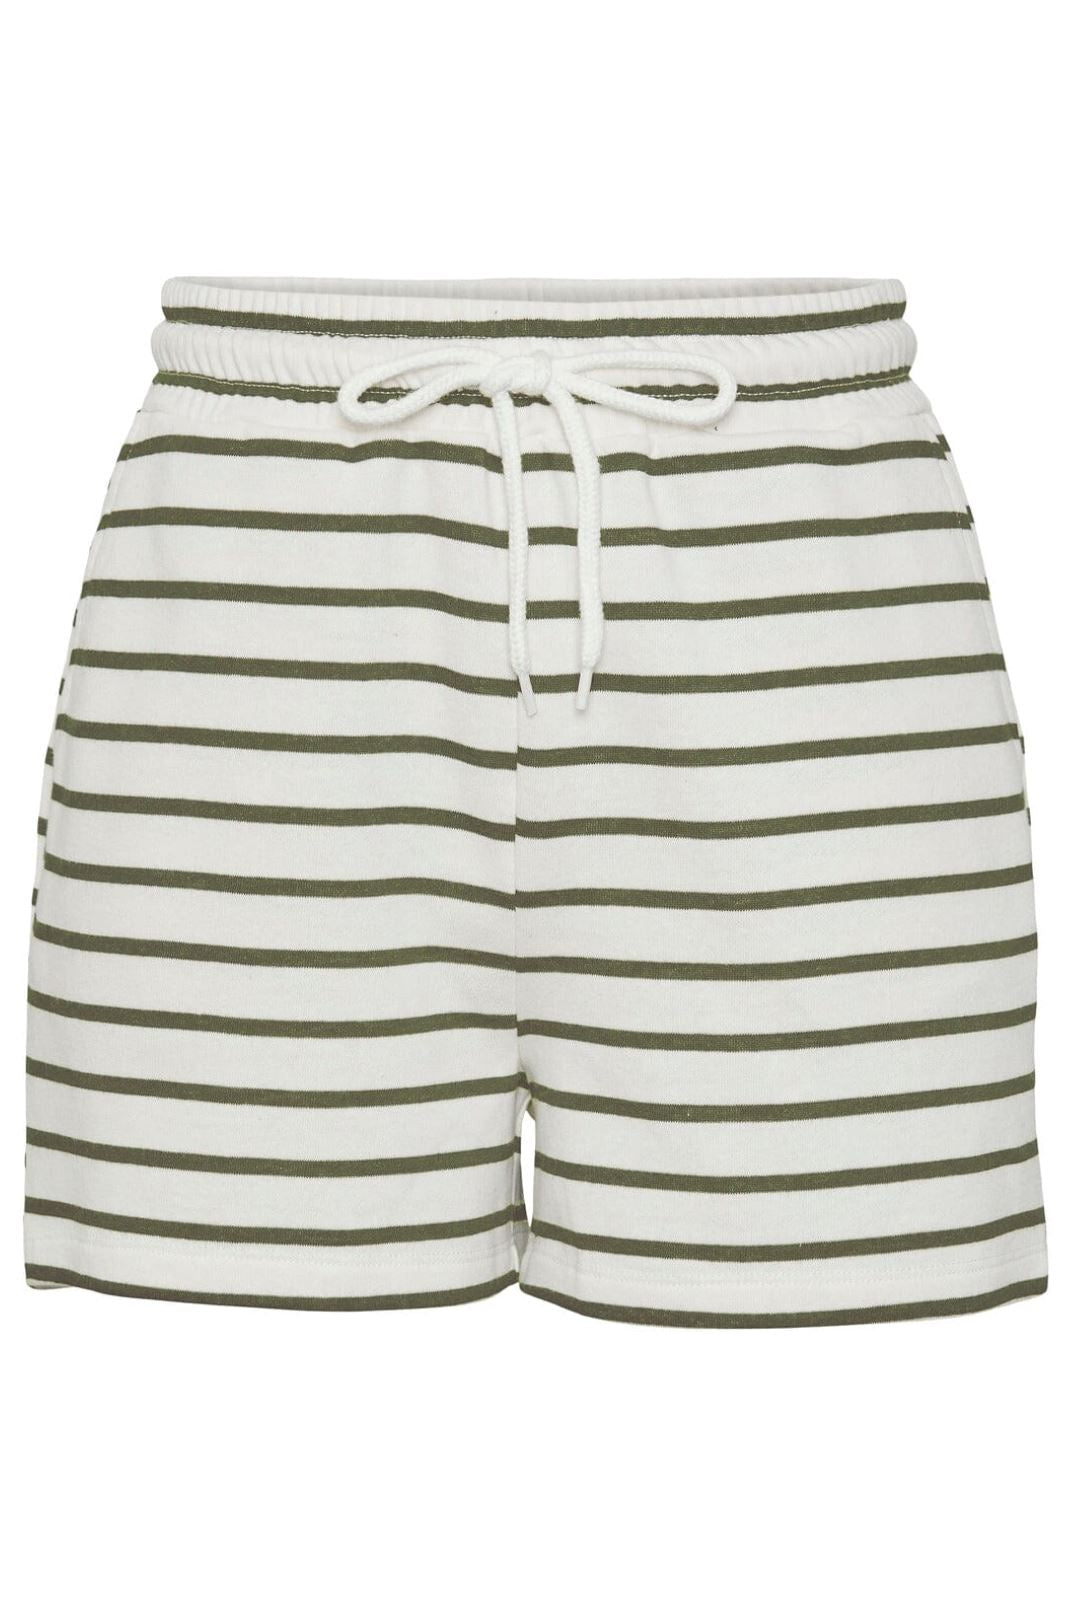 Pieces - Pcchilli Summer Shorts Stripe - 4410141 Cloud Dancer Deep Lichen Green Shorts 